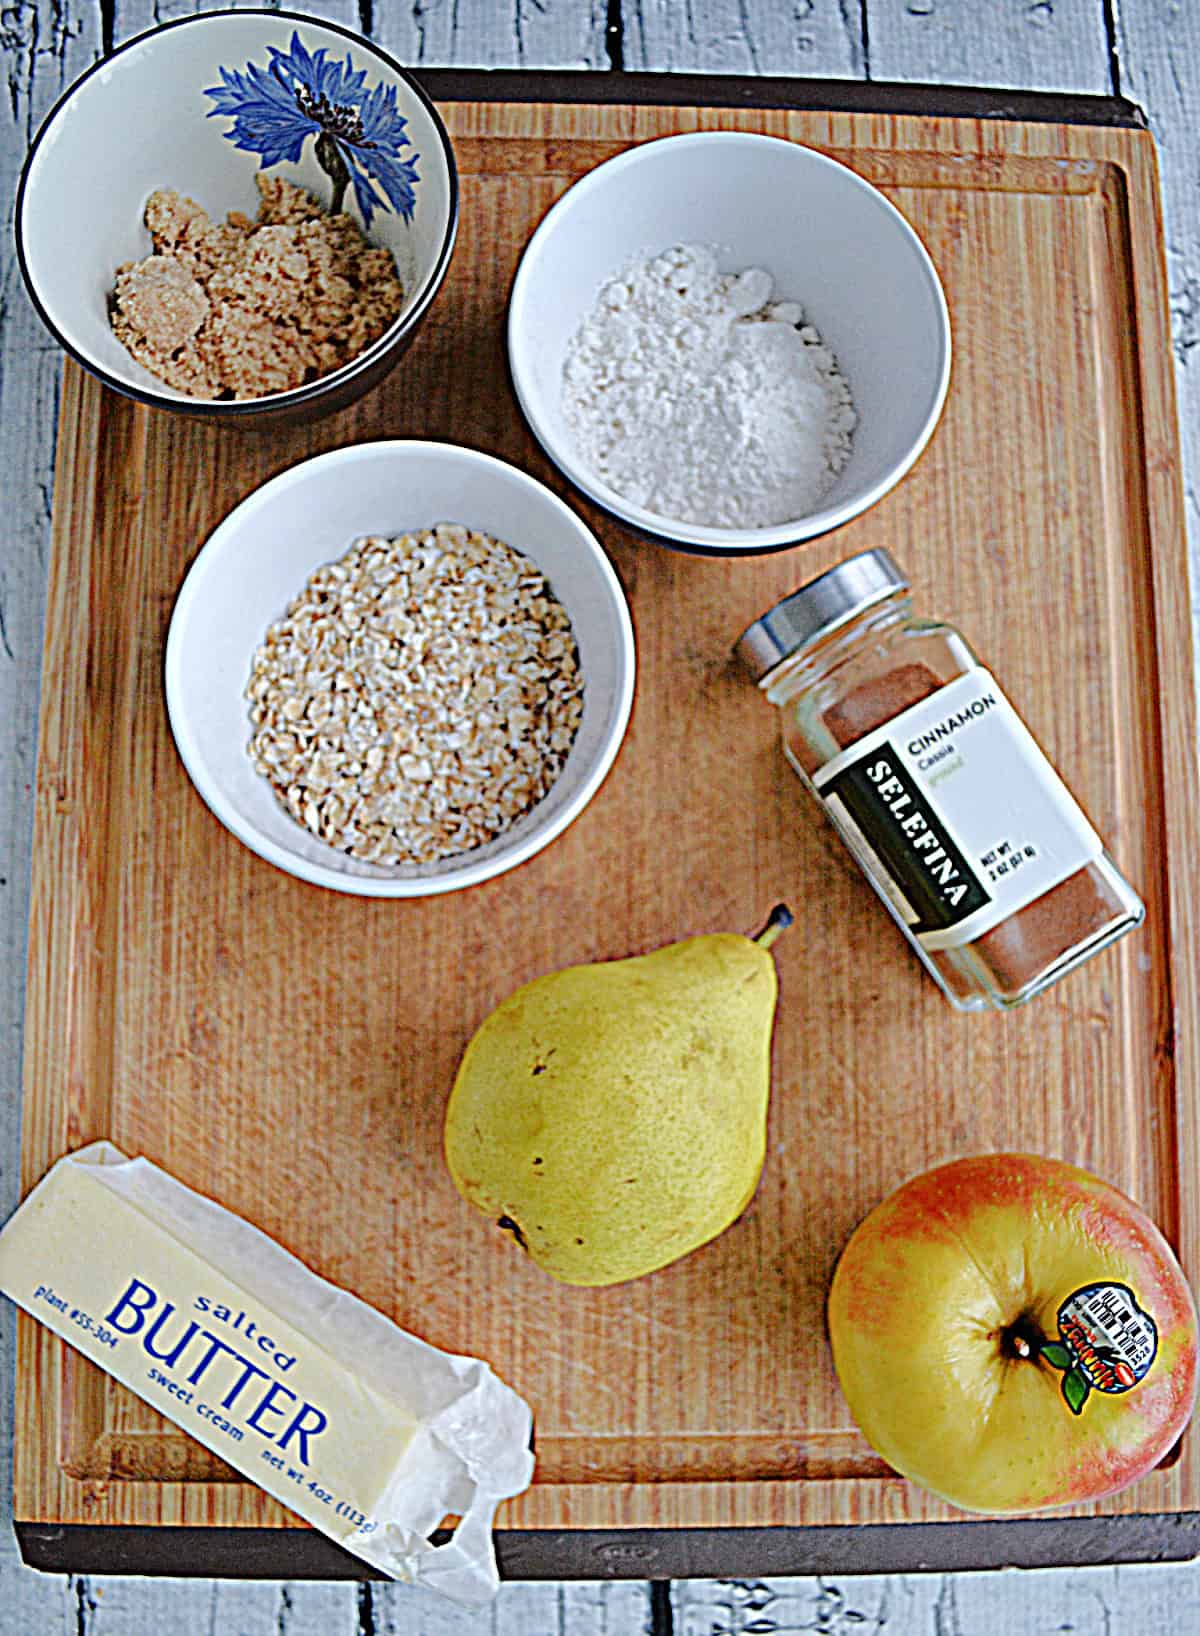 Ingredients for making Apple Pear Crisp.